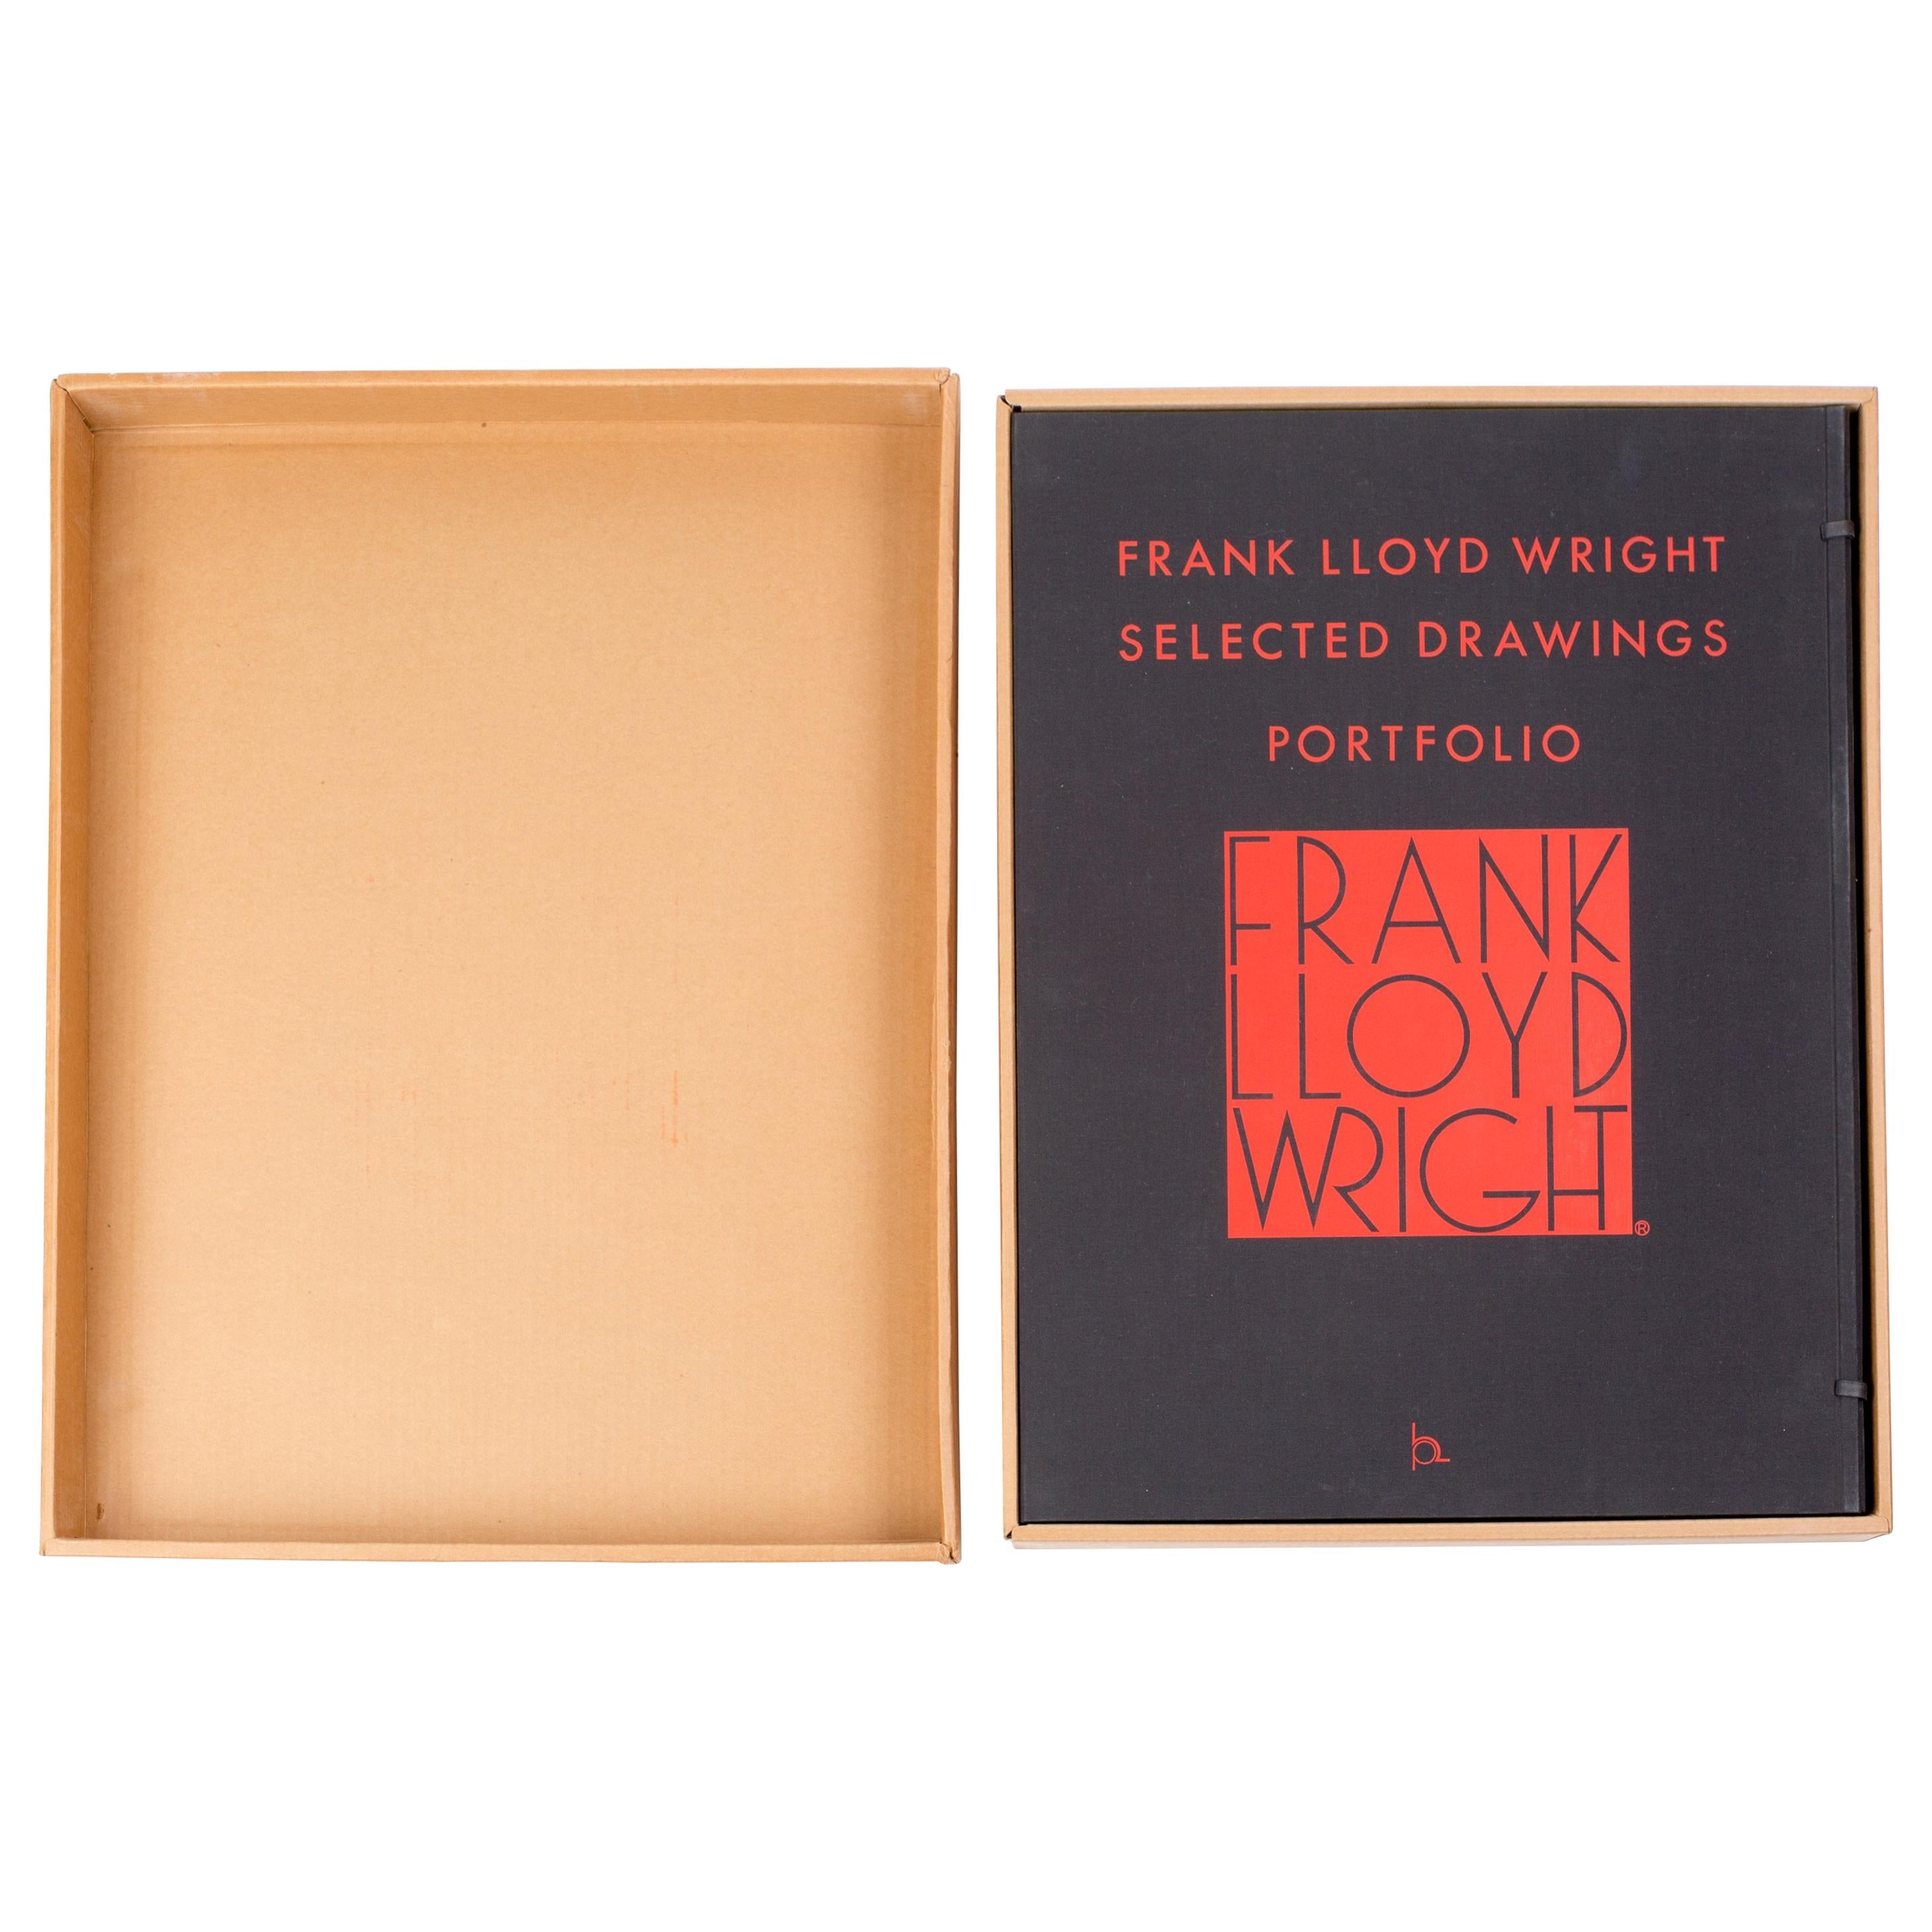 Frank Lloyd Wright "Selected Drawings, " Volume 1, 1977